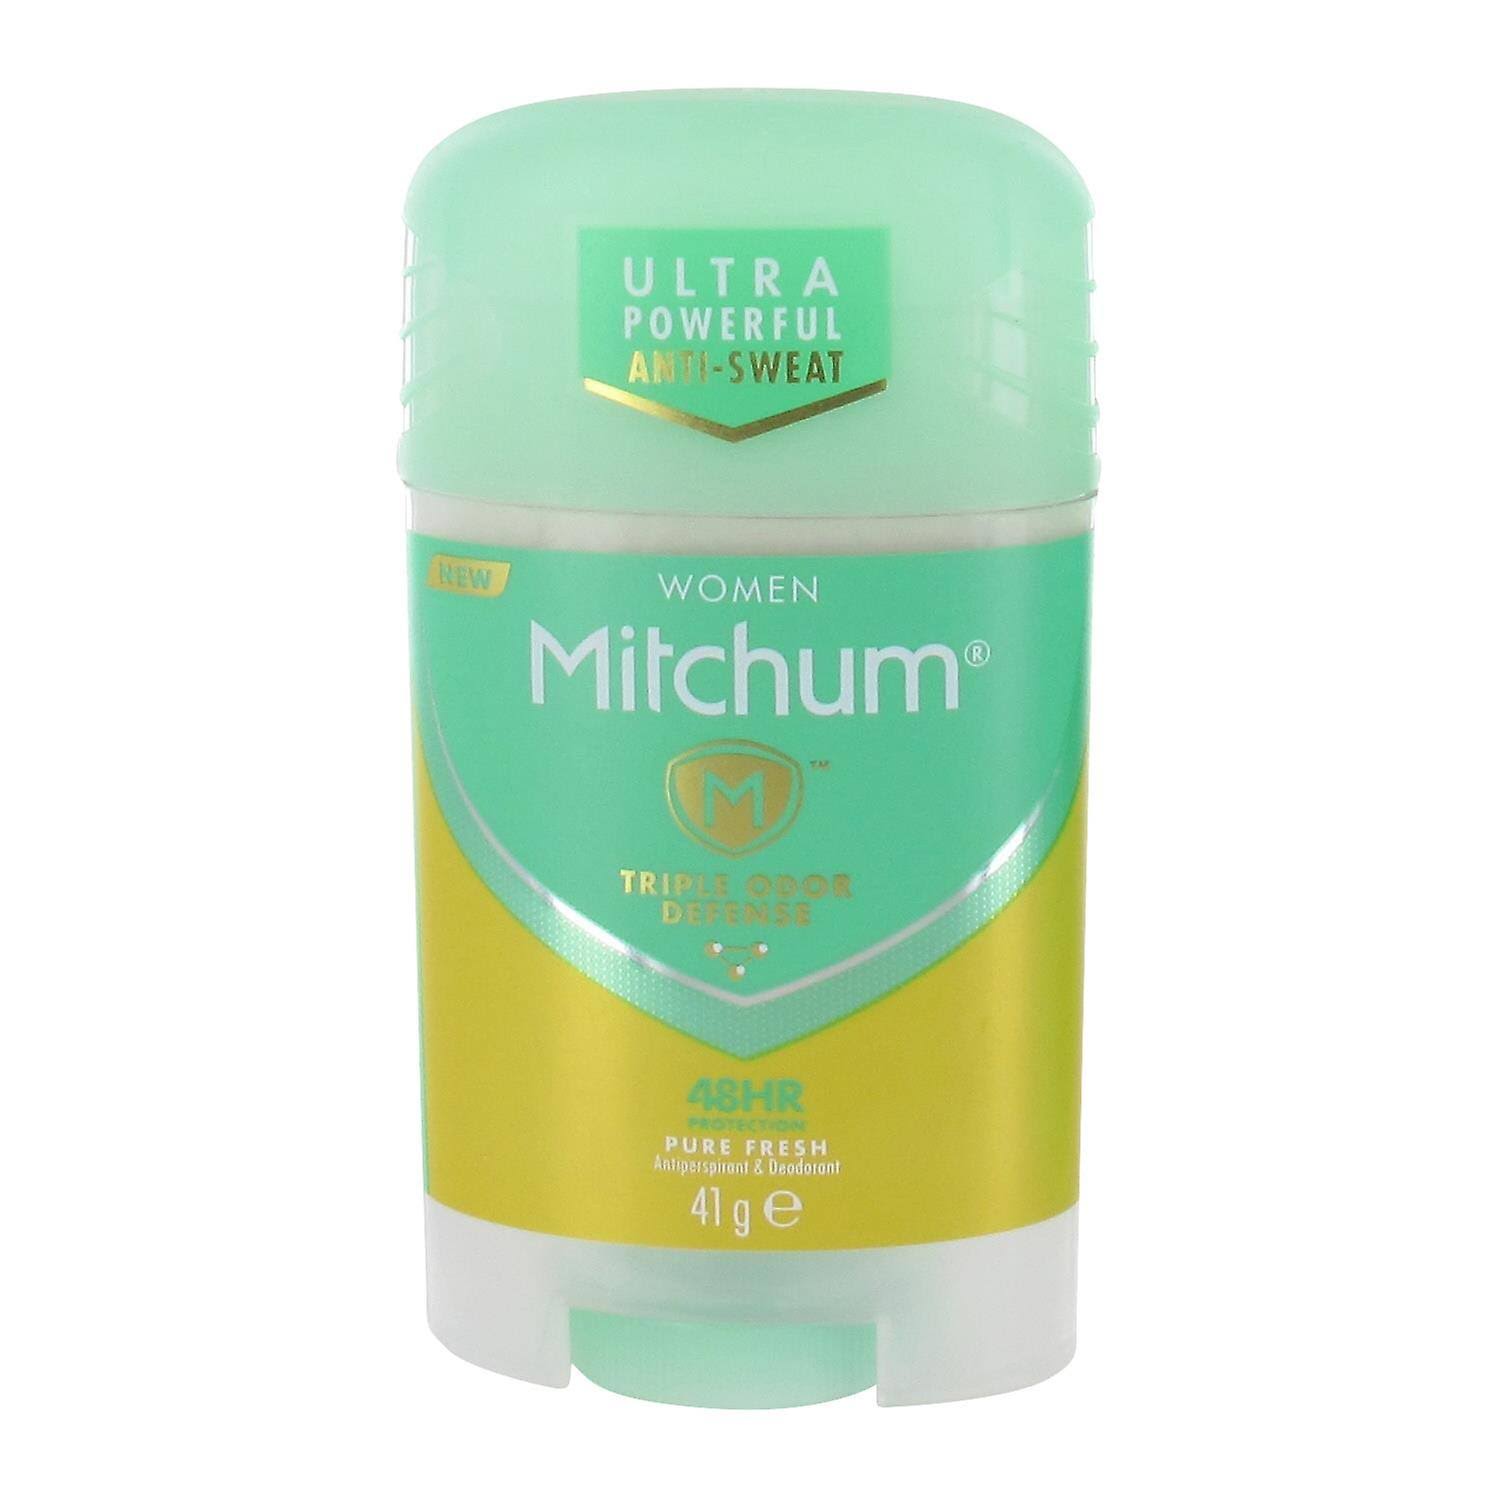 Mitchum Advanced Control Women's Pure Fresh Anti Perspirant and Deodorant - 41g